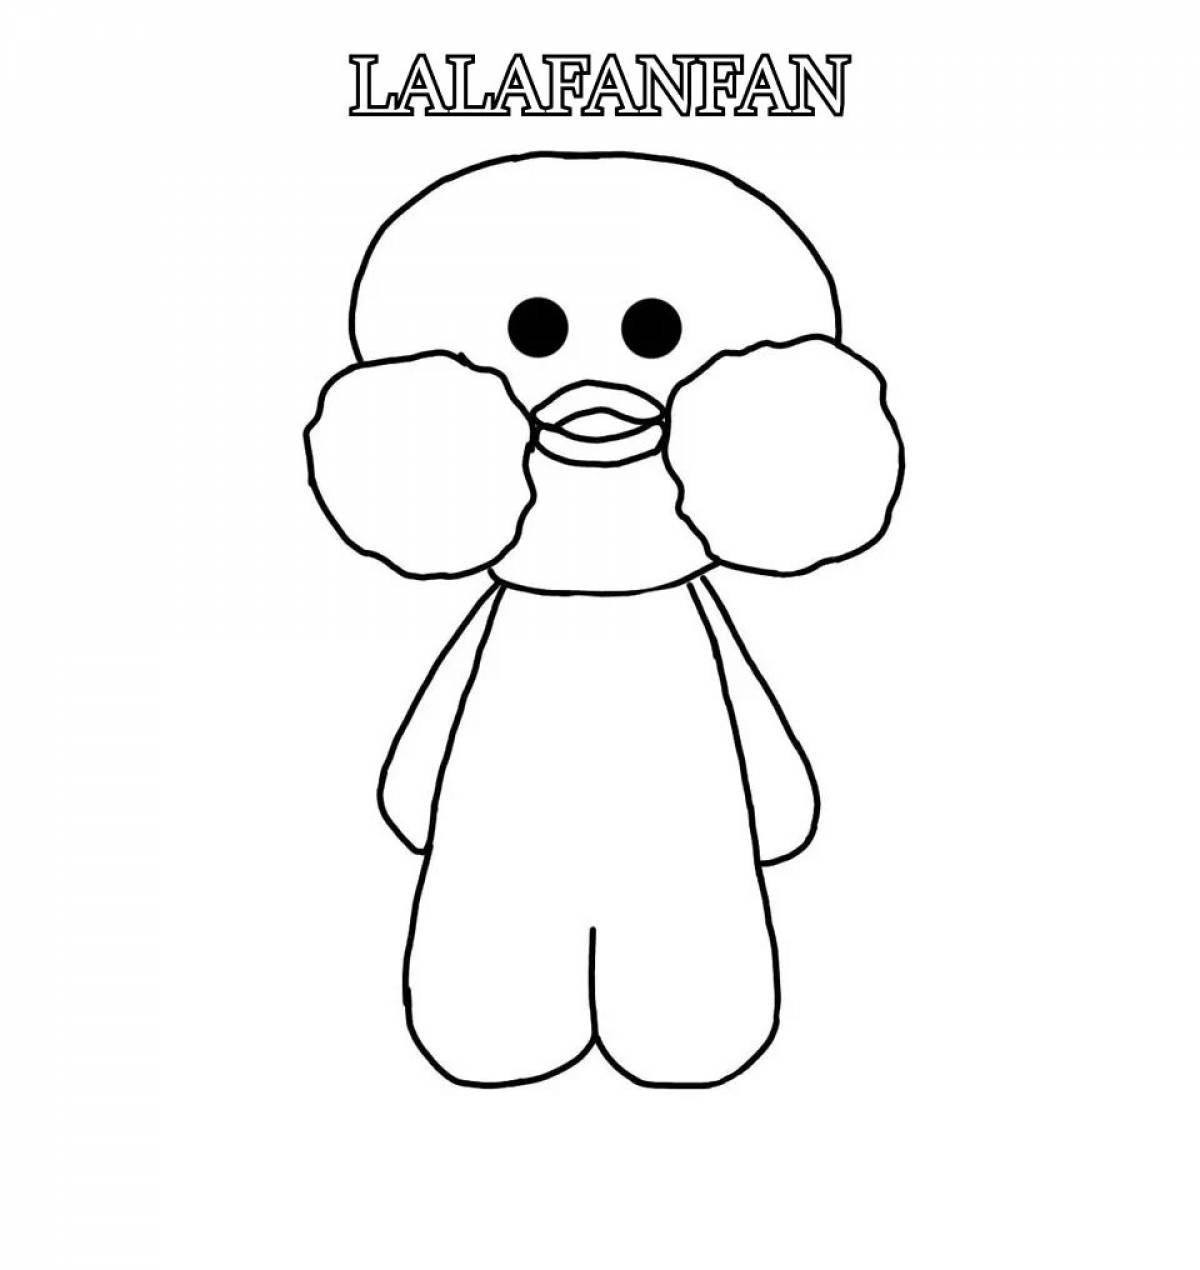 Humorous coloring duck furniture lalafanfan